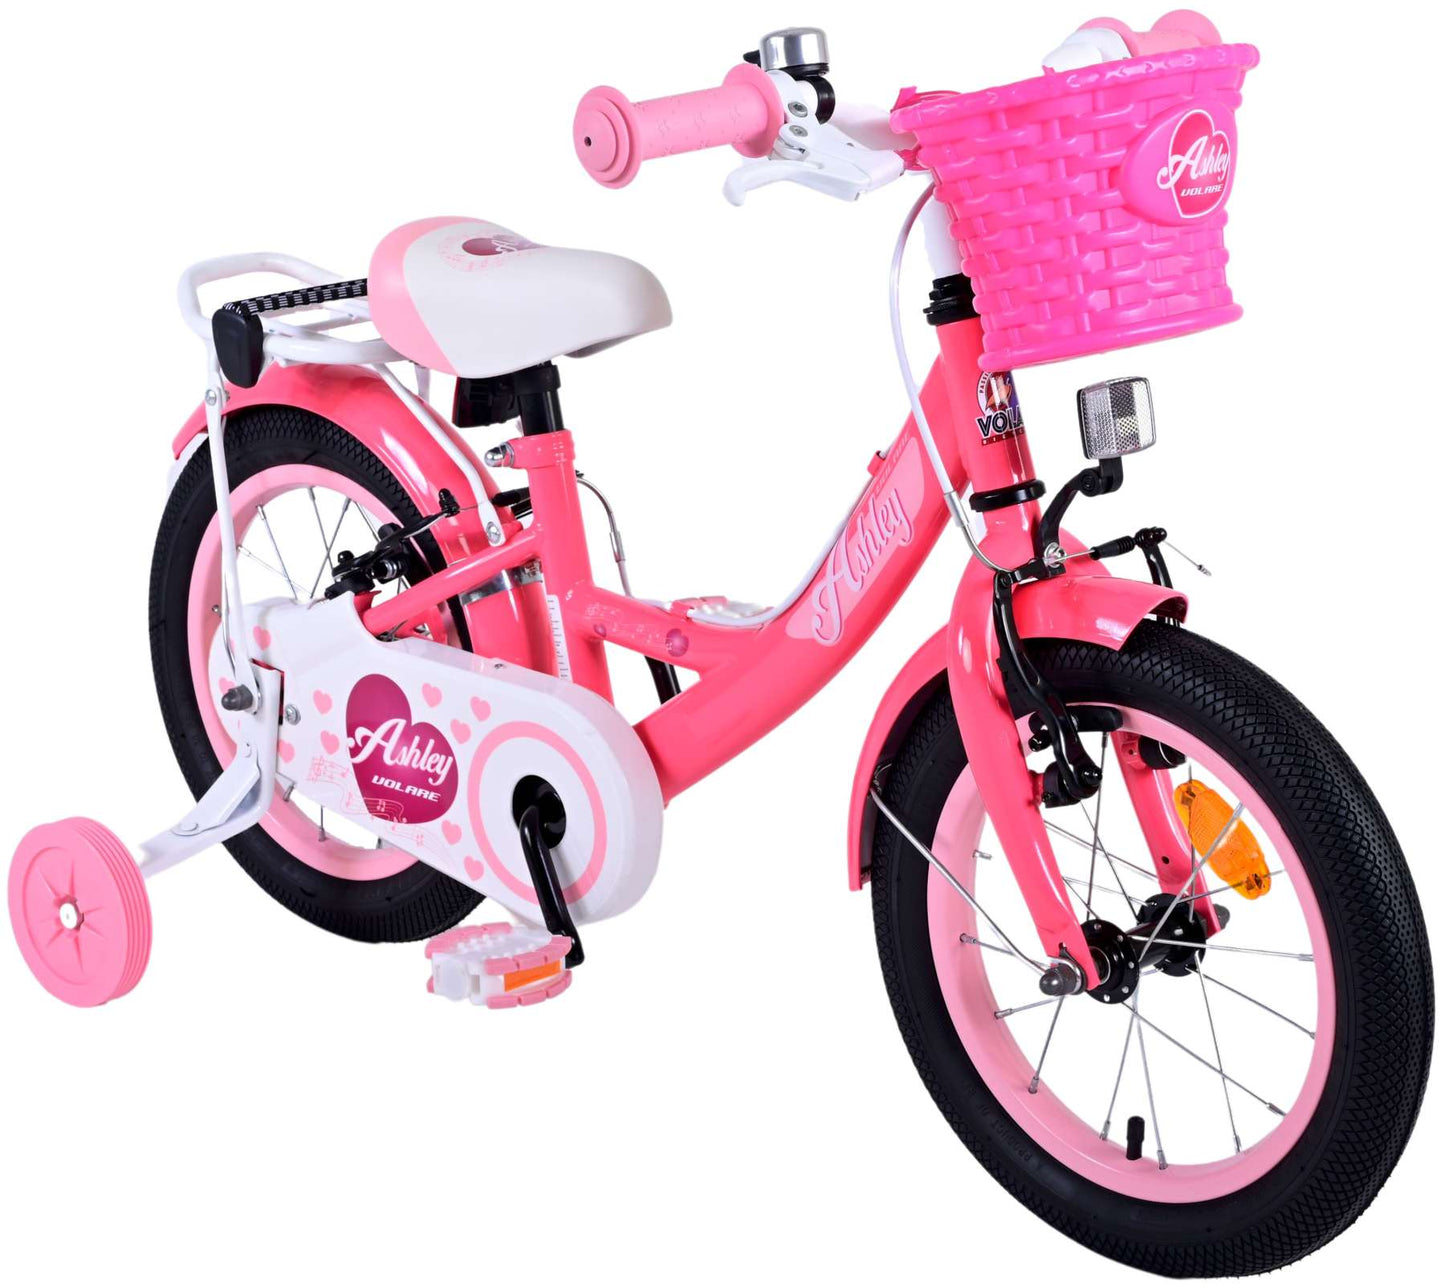 Bicicleta para niños de Vinare Ashley - Niñas - 14 pulgadas - Rojo rosa - Dos frenos de mano